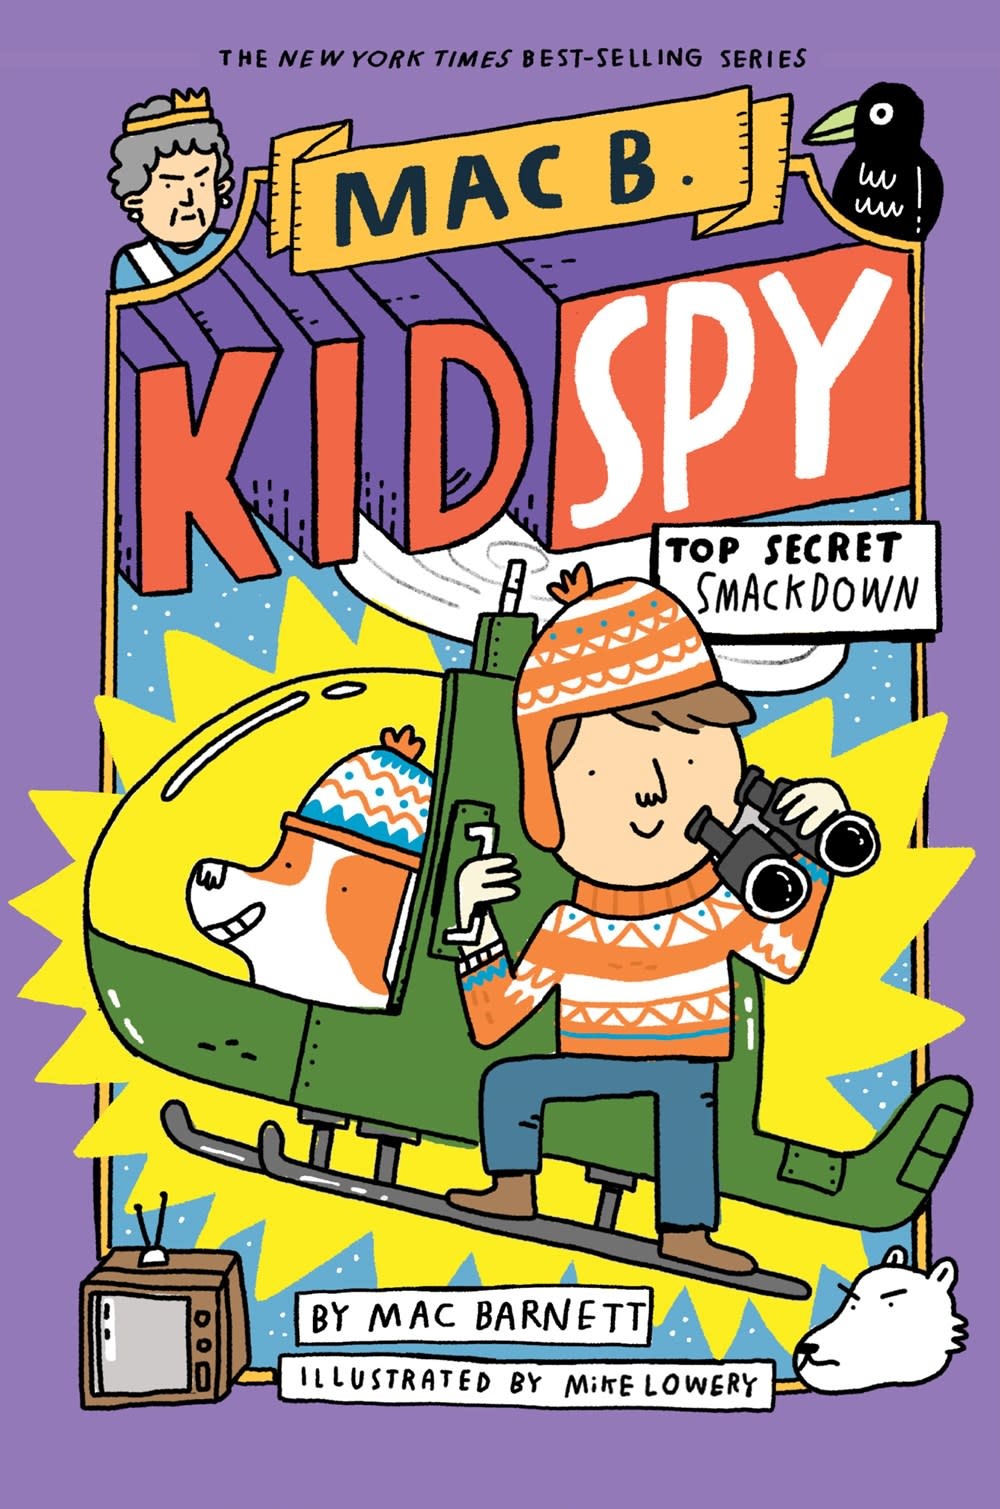 Orchard Books Mac B., Kid Spy #3 Top Secret Smackdown